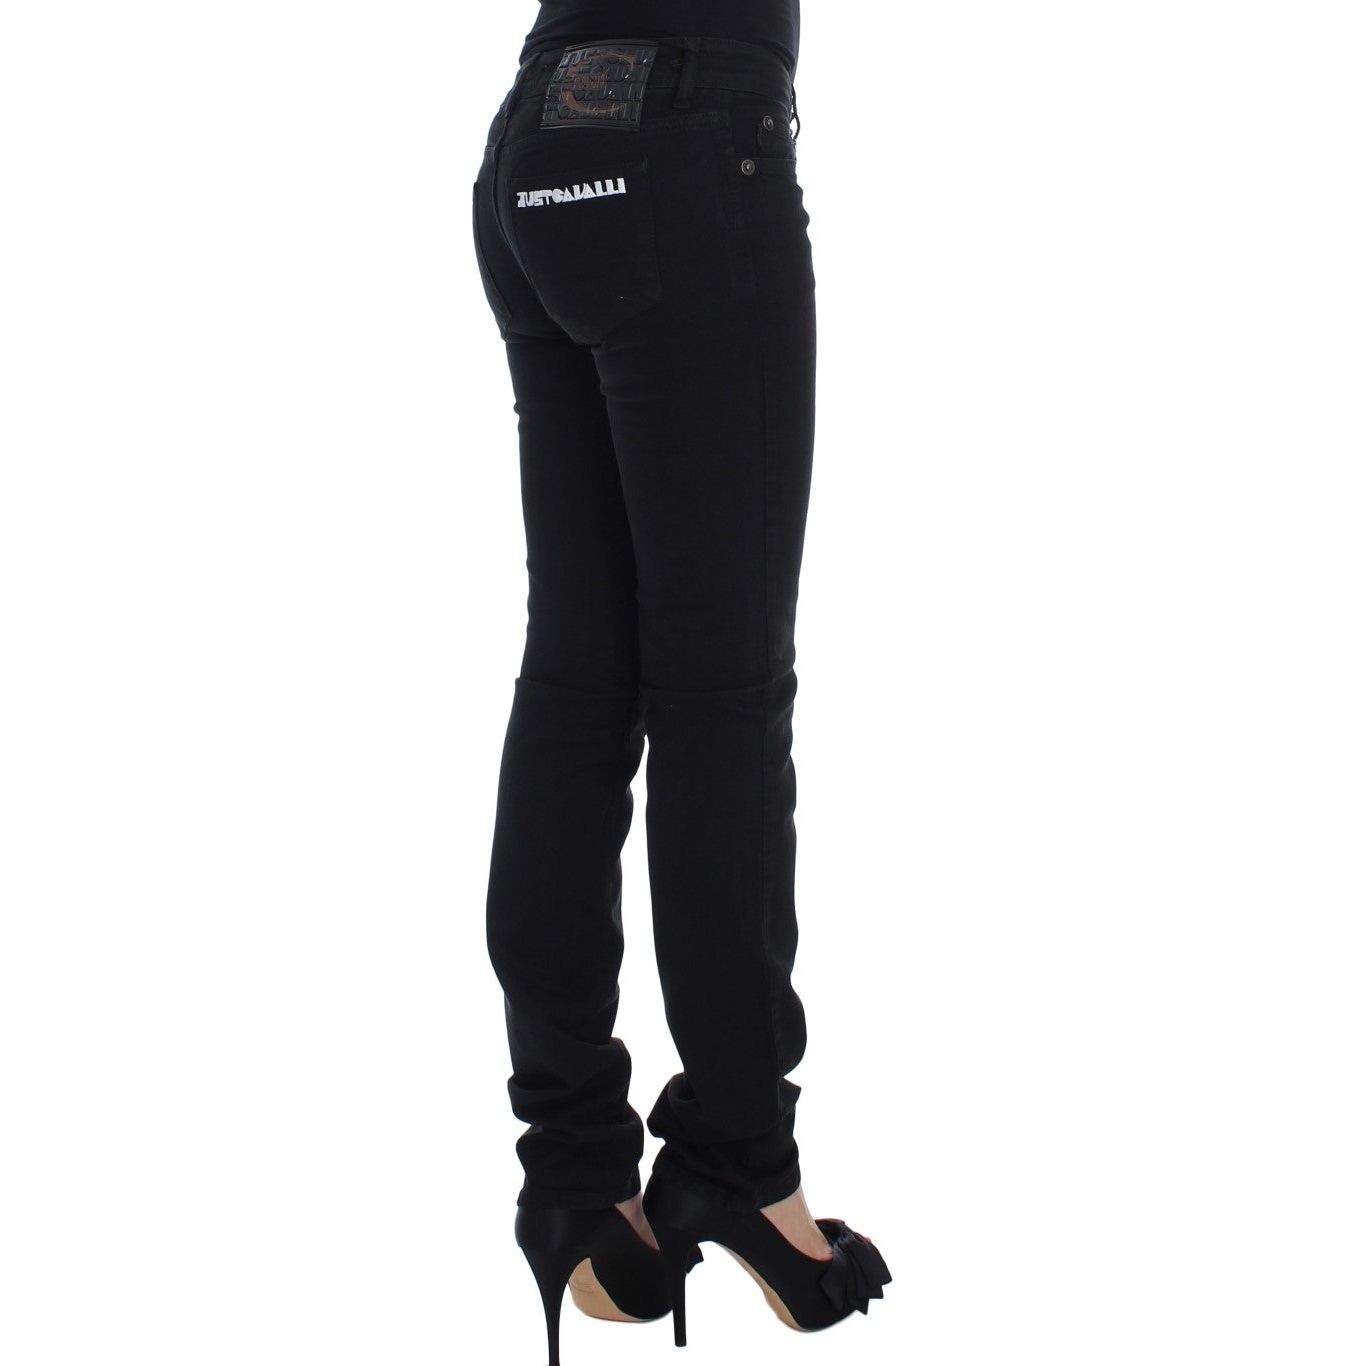 Cavalli Chic Slim Skinny Black Jeans black-cotton-stretch-slim-skinny-fit-jeans Jeans & Pants